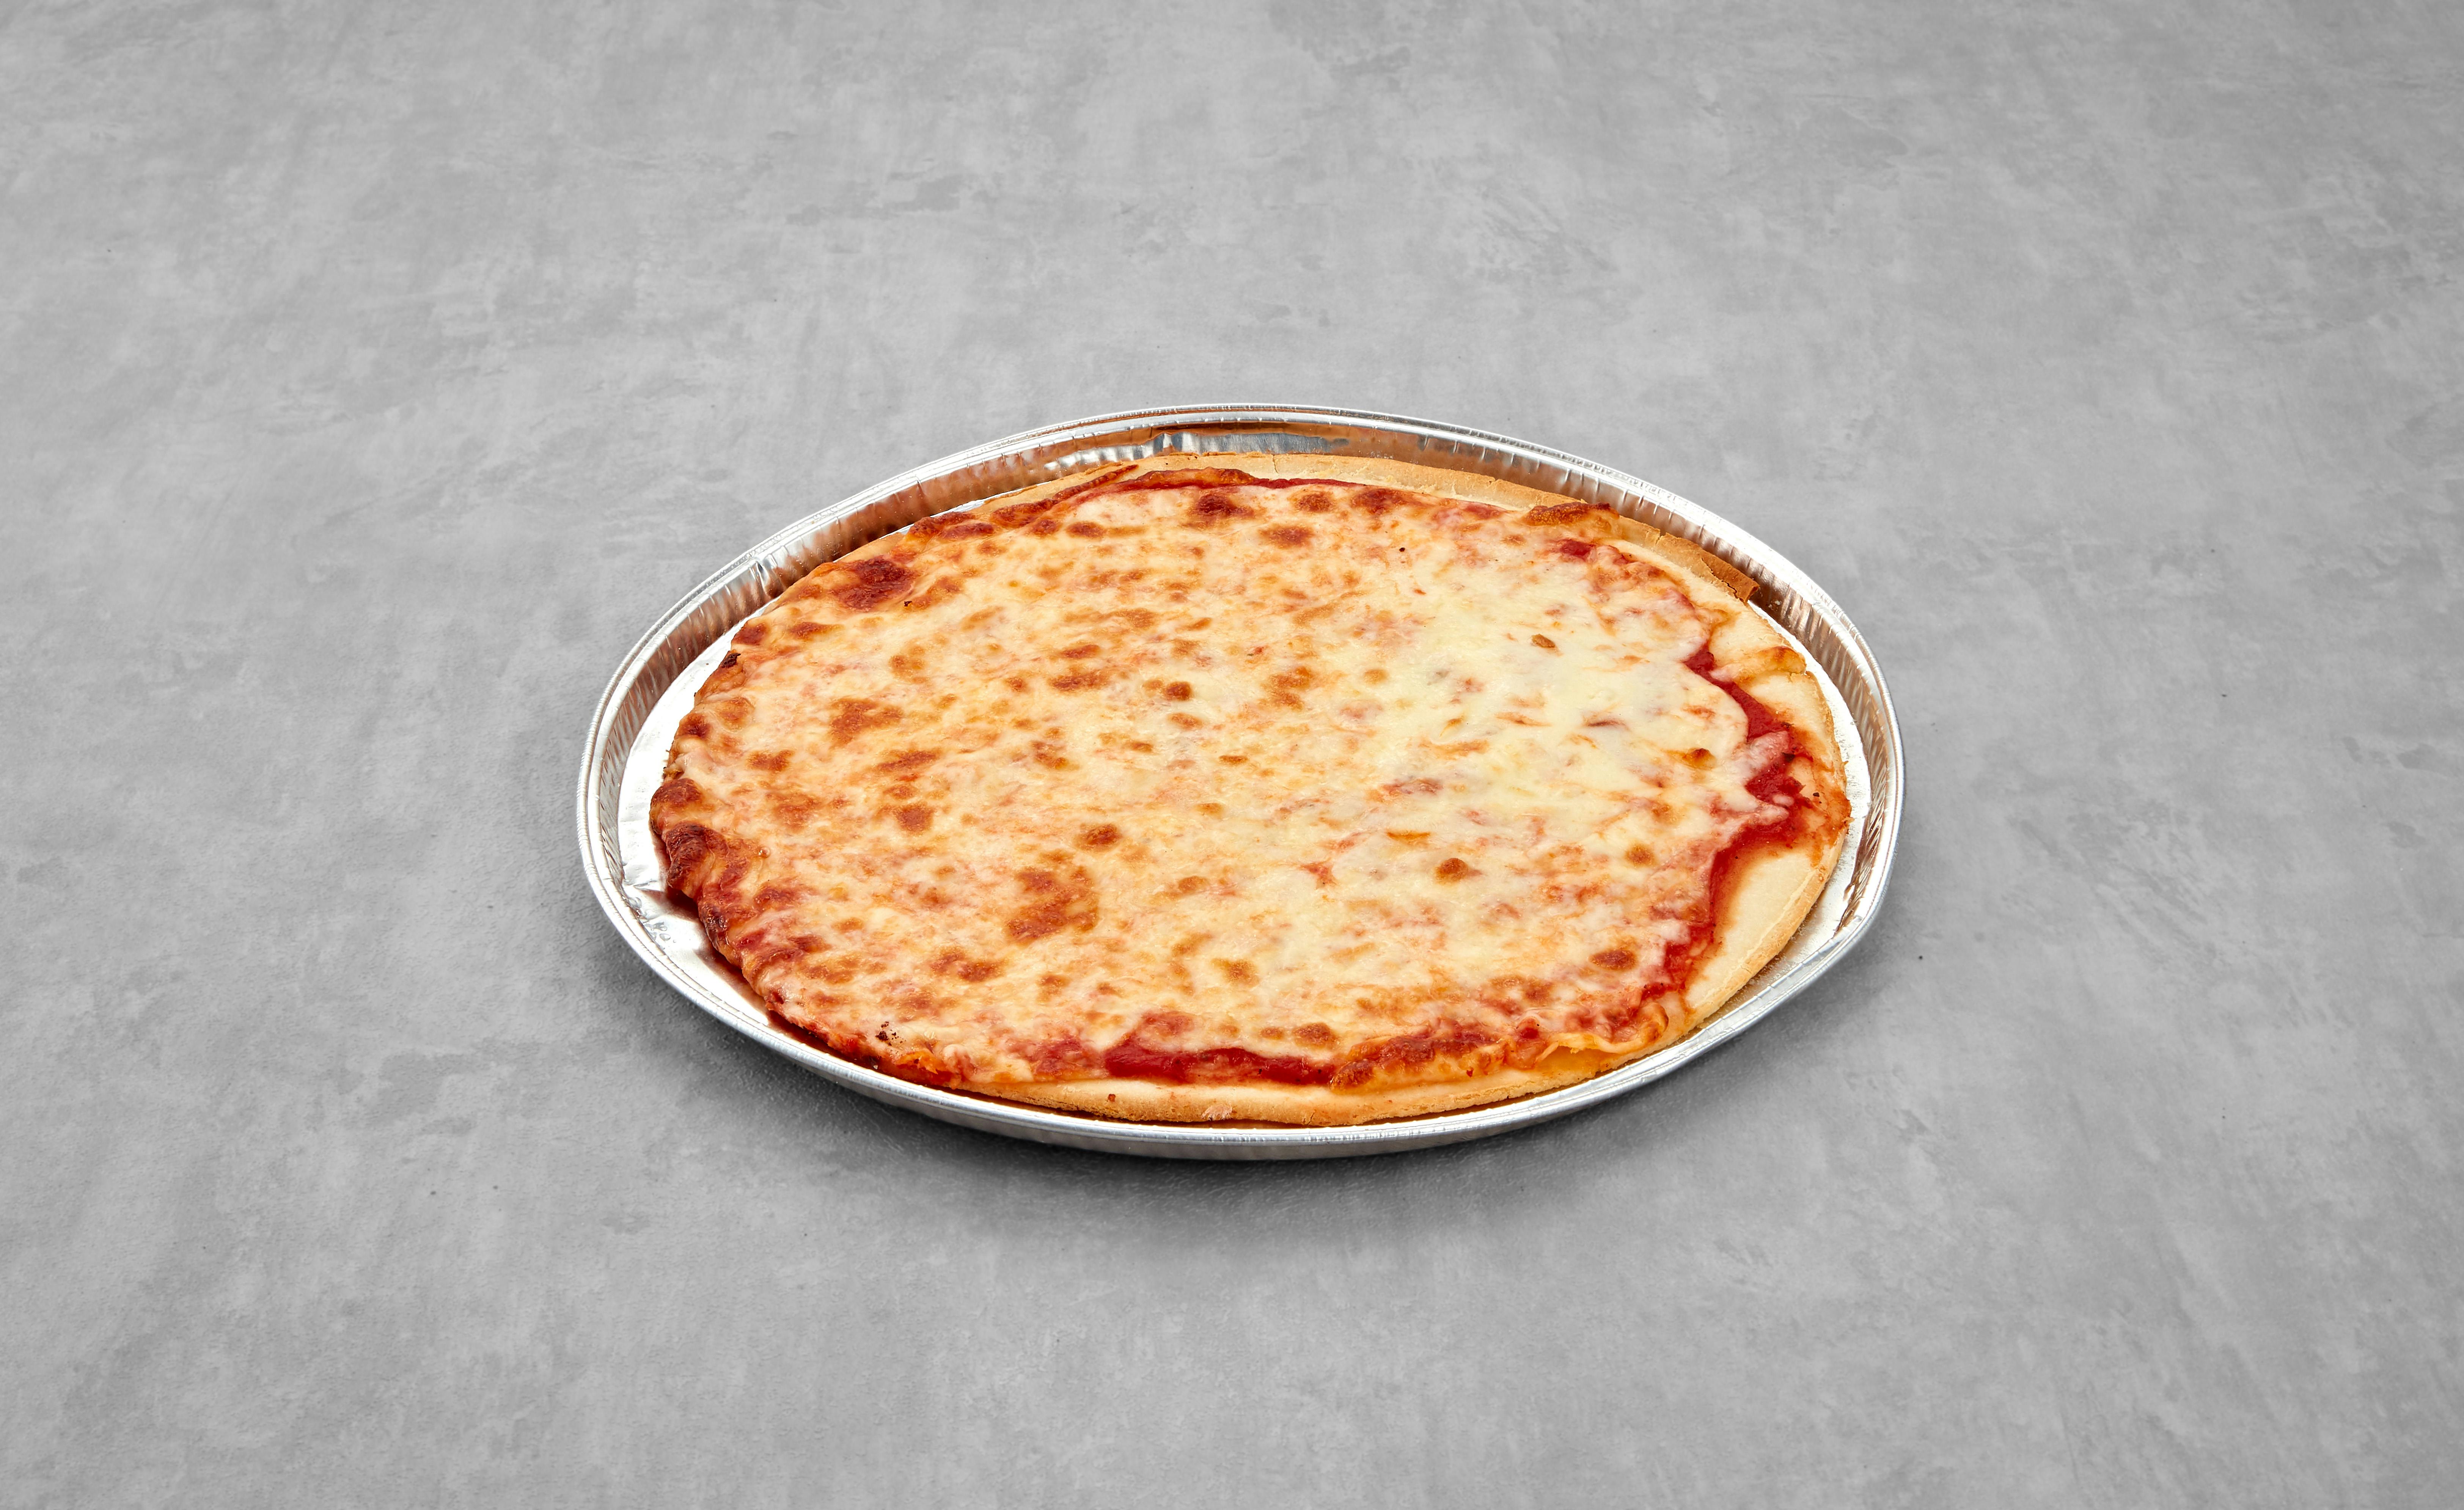 Gluten Free Thin Crust Pizza from Mario's Pizzeria in Seaford, NY